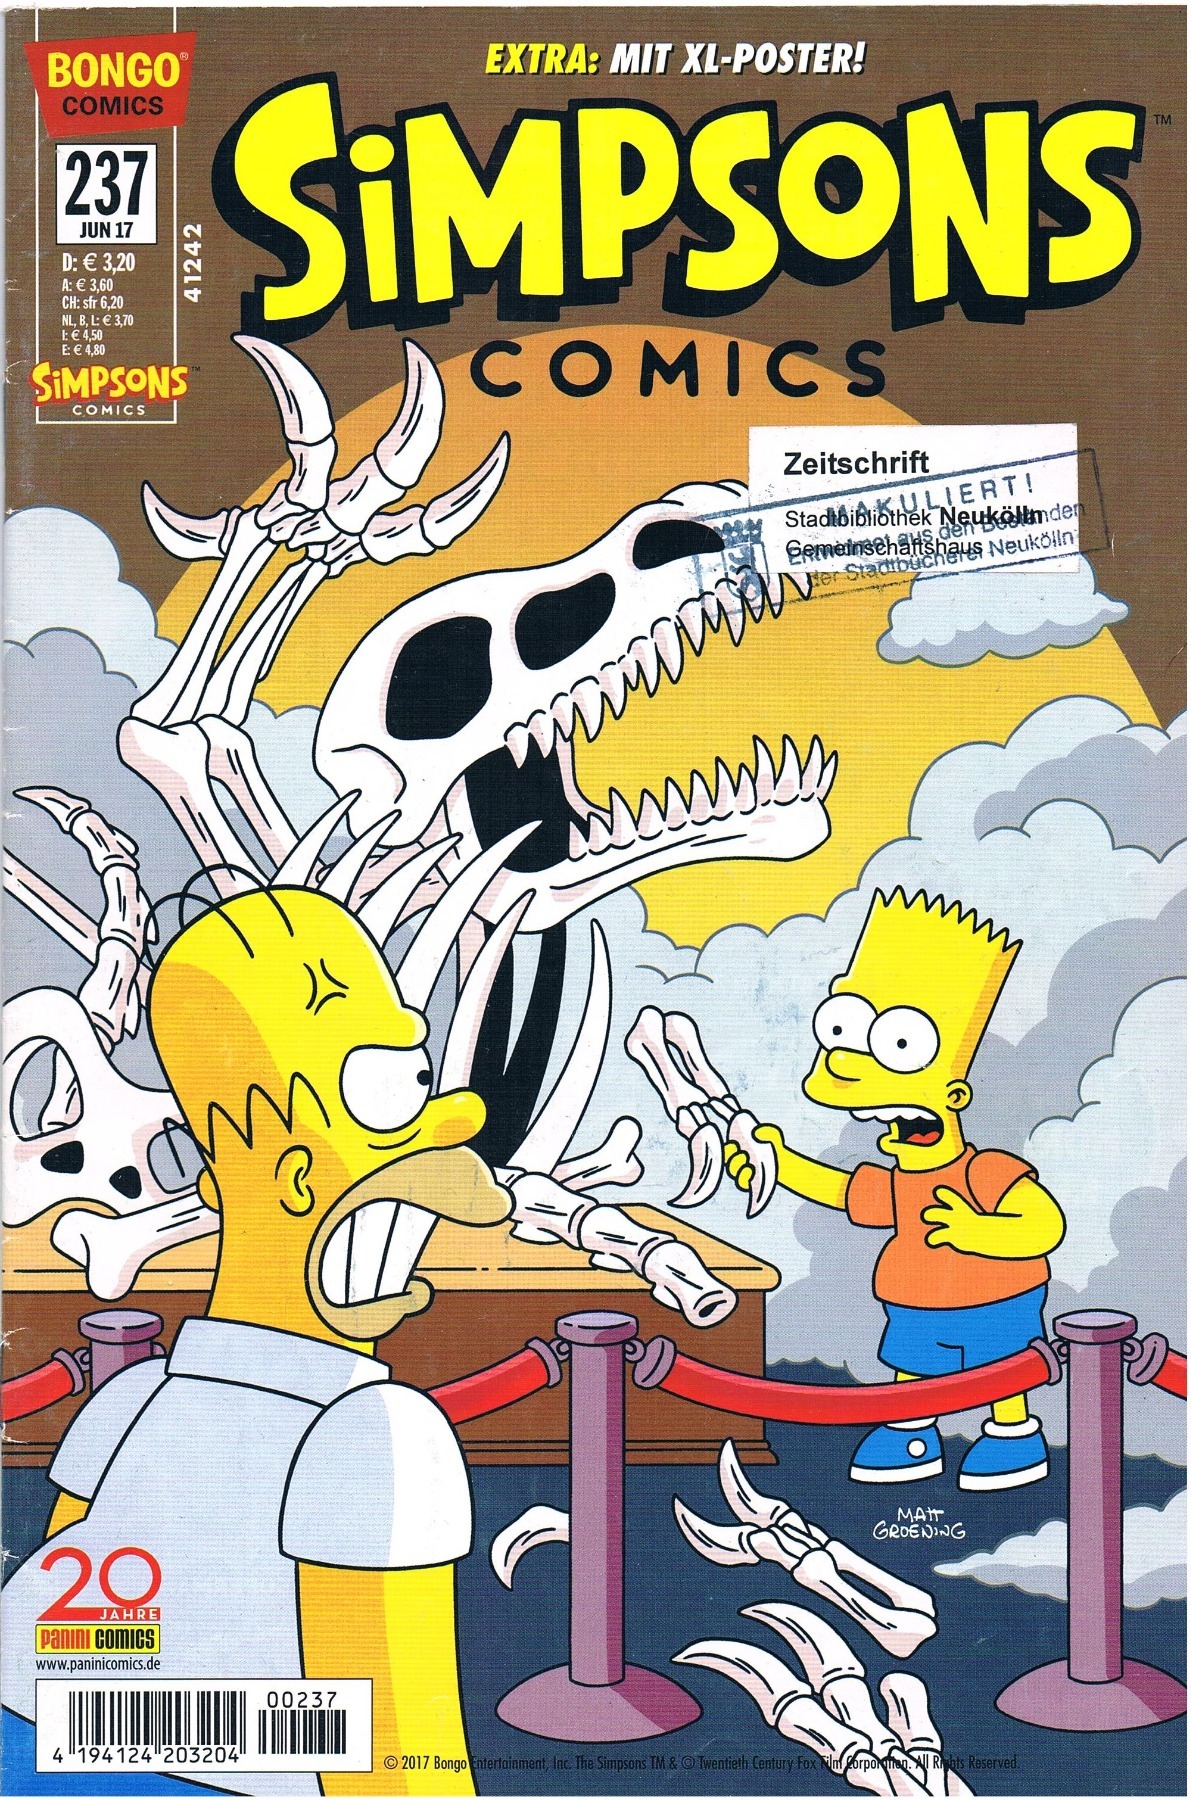 Simpsons Comics - Issue 237 - Jun 17 2017